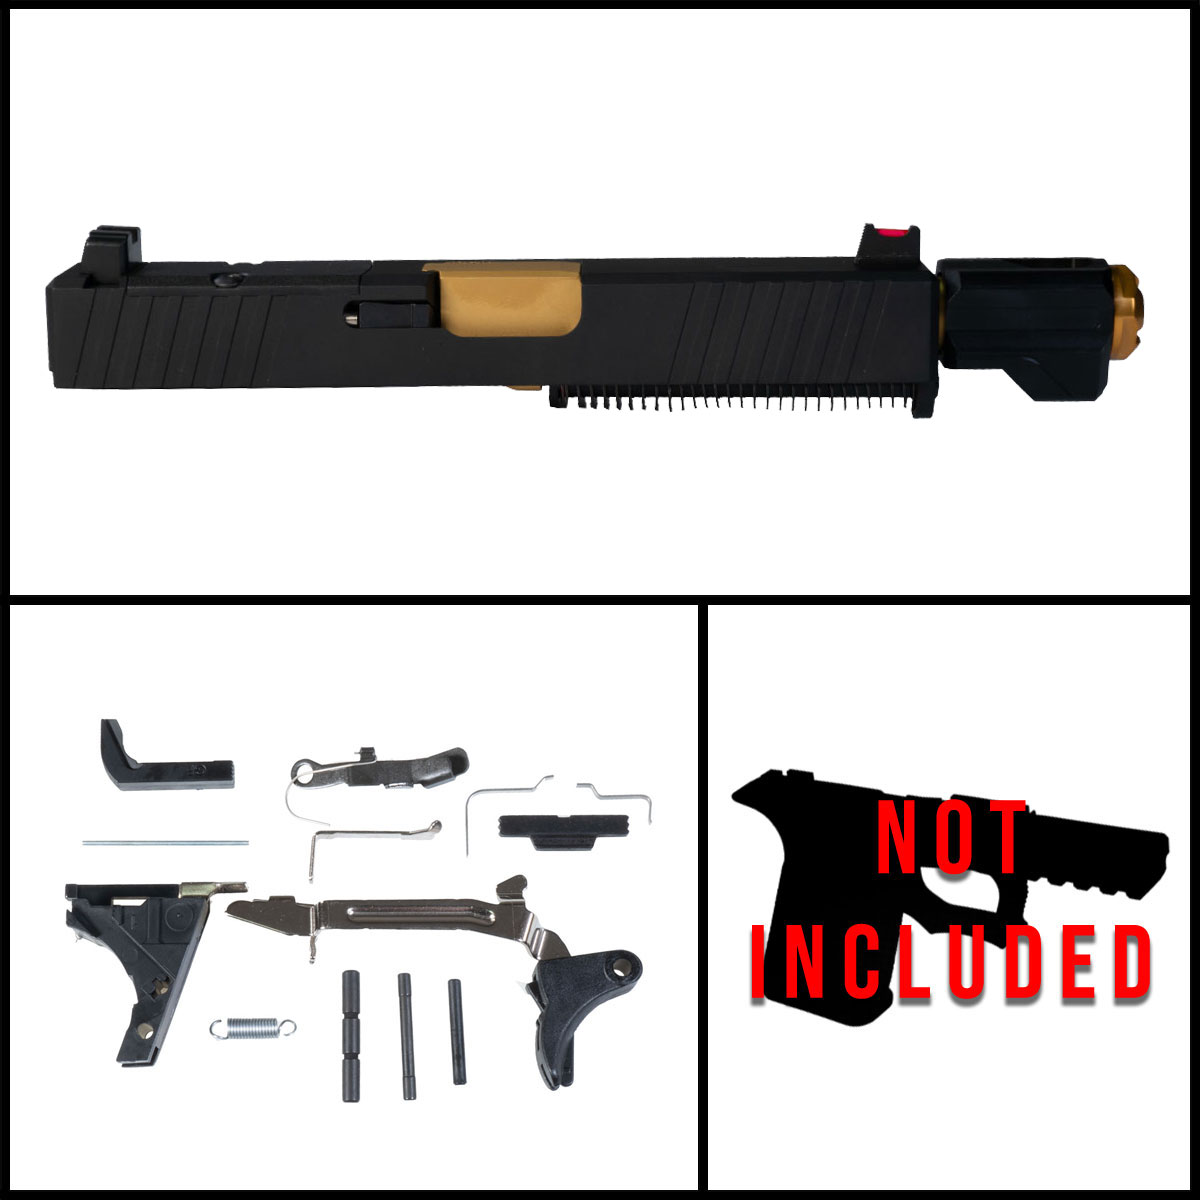 DD 'Bam w/ Tyrant Designs Compensator' 9mm Full Pistol Build Kit (Everything Minus Frame) - Glock 19 Gen 1-3 Compatible